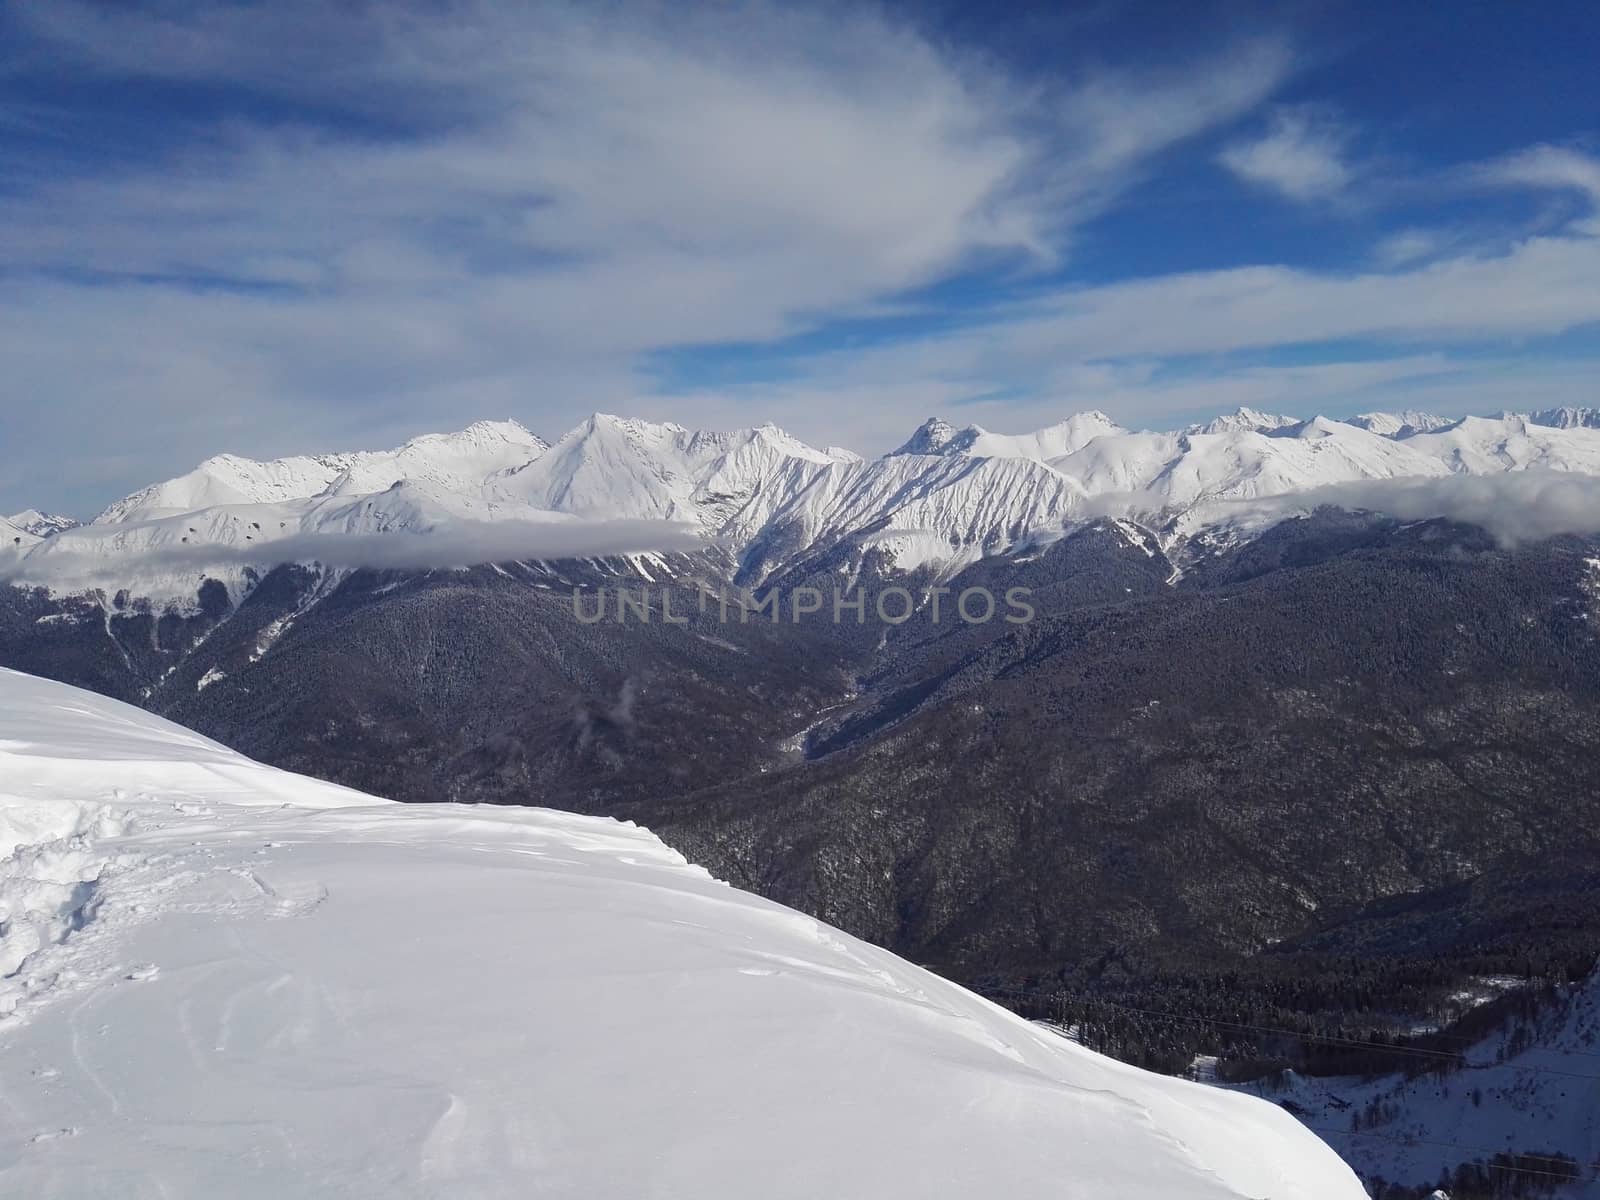 .Winter ski resort view of mountains and slopes by galinasharapova